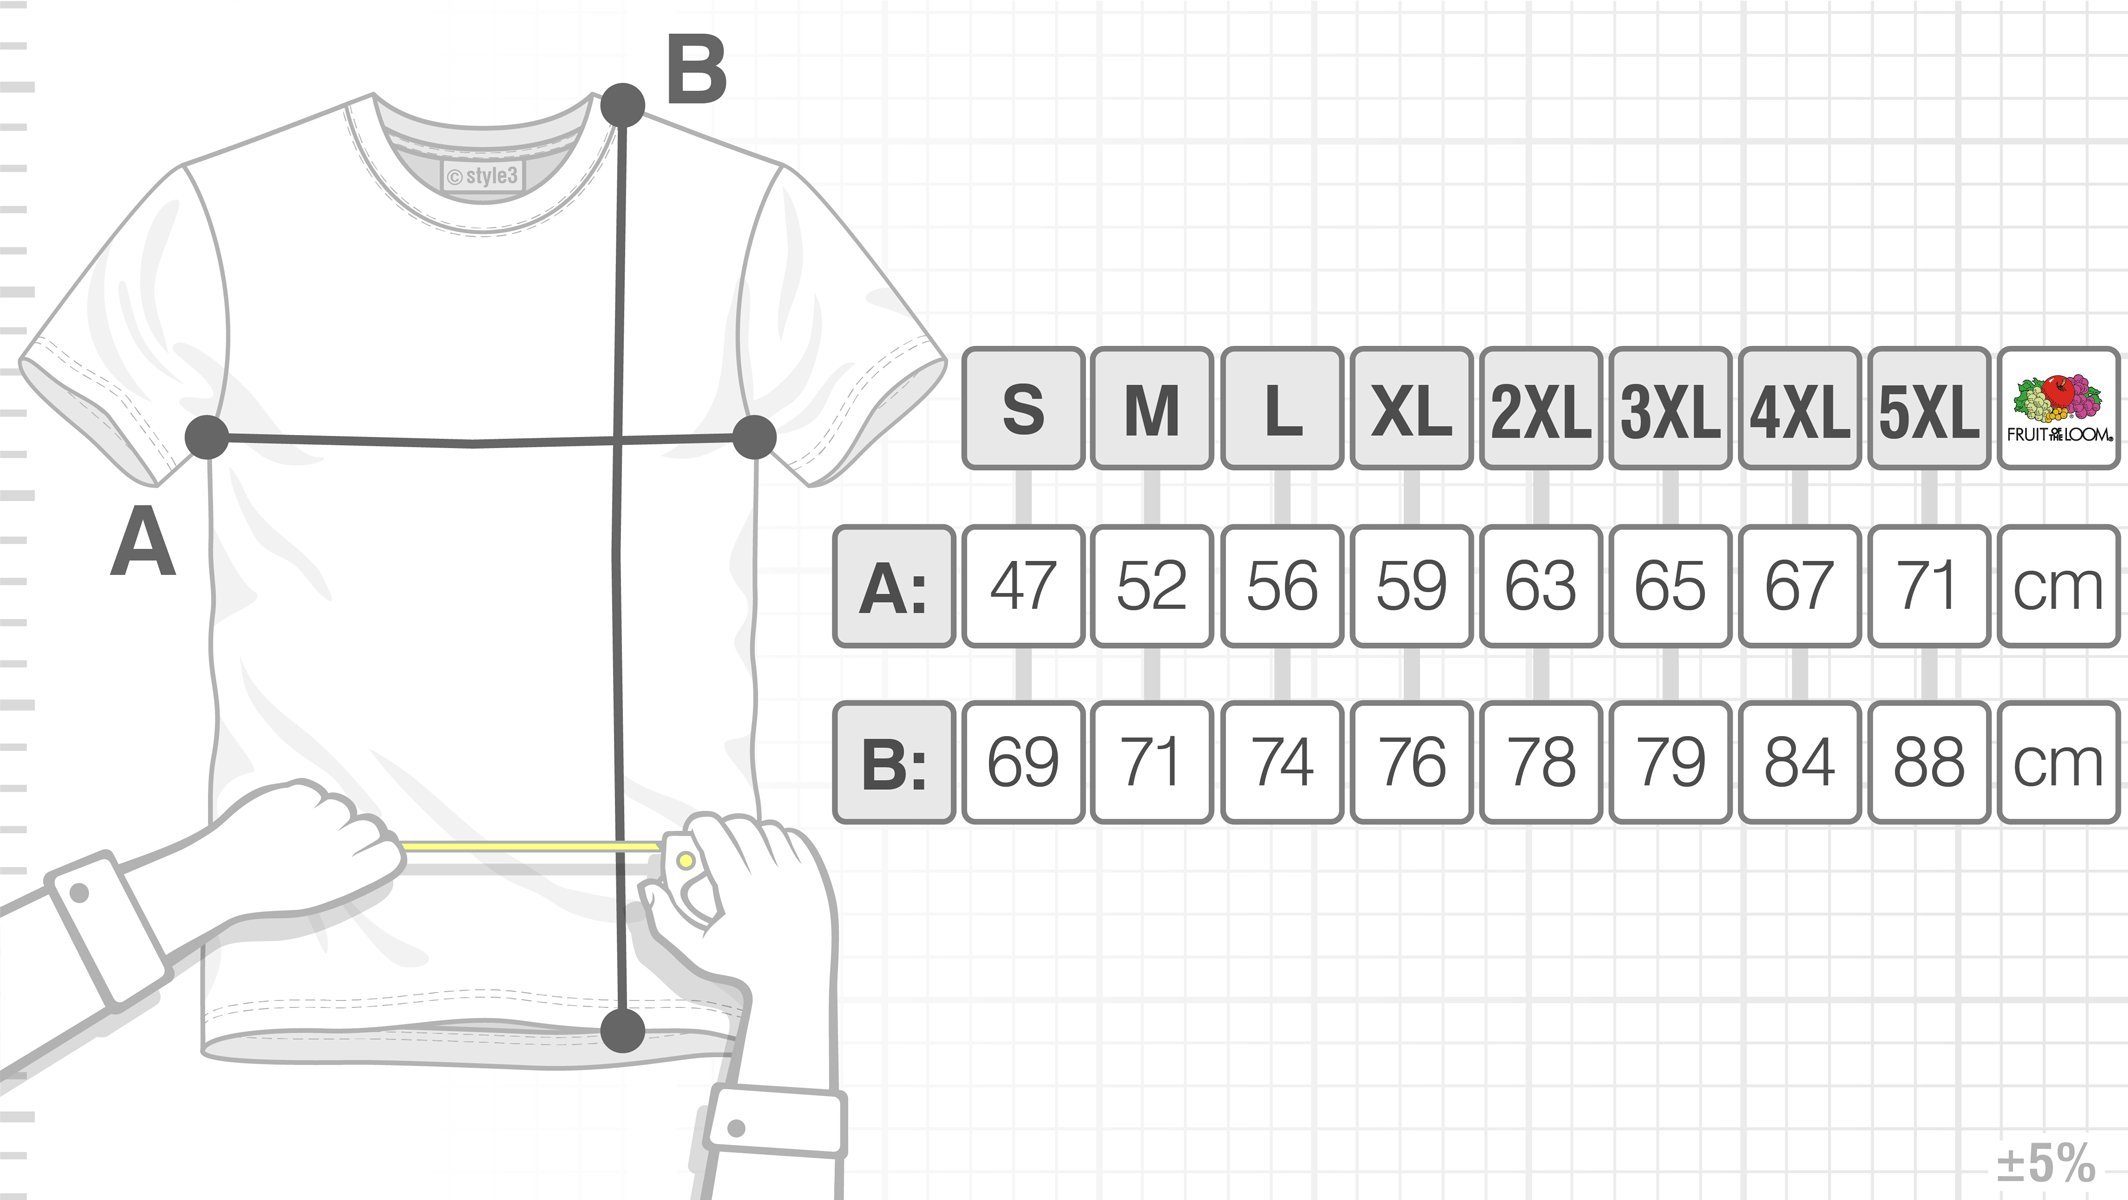 Print-Shirt Würfel schwarz T-Shirt Big Penrose geo Herren style3 Sheldon Escher Dreieck Cooper Theory Bang